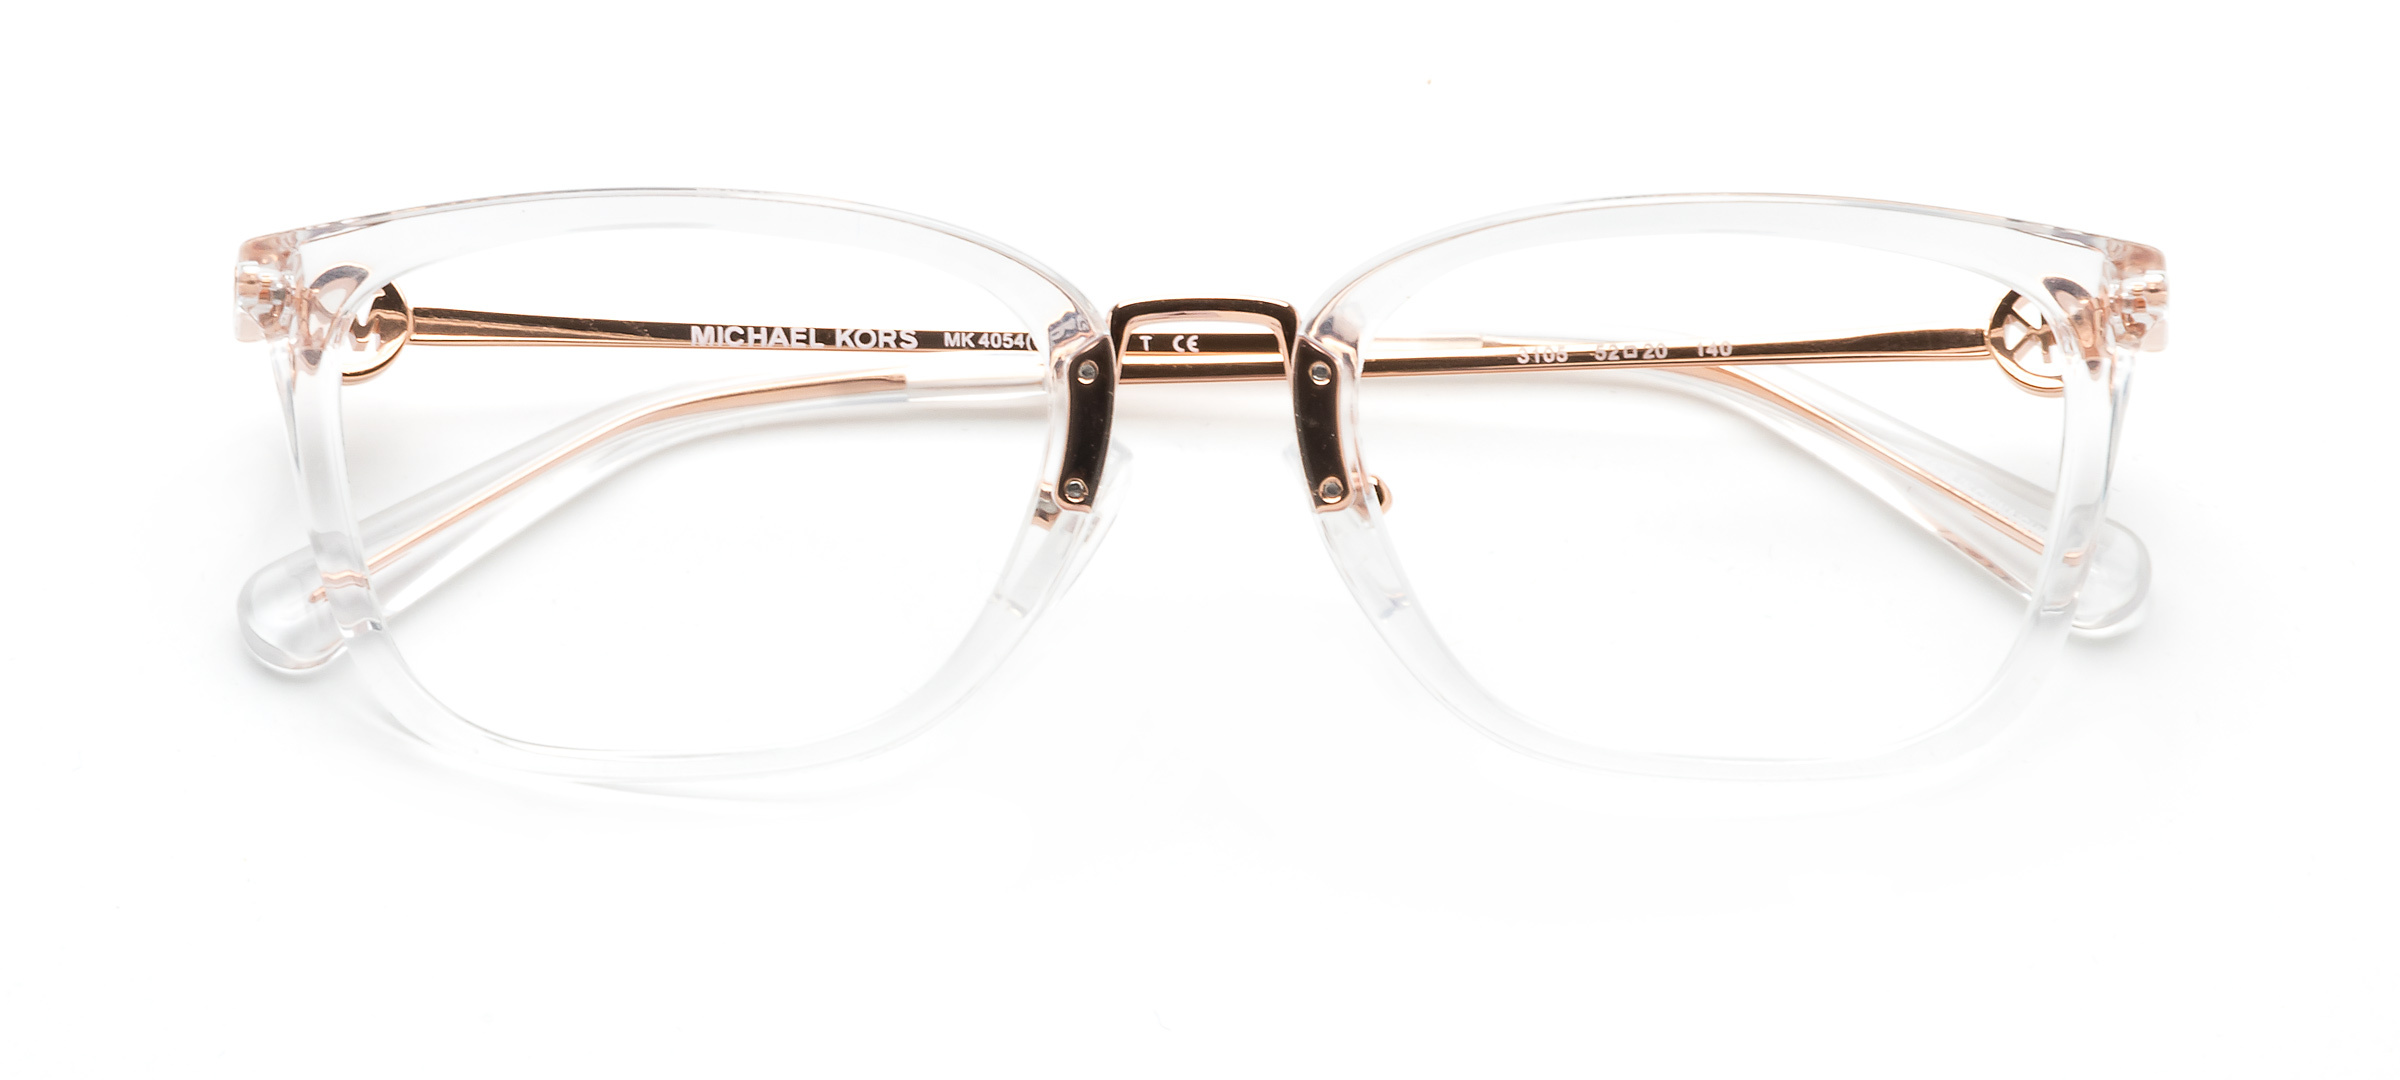 Michael Kors Sunglasses Glasses: Eyewear LensCrafters 